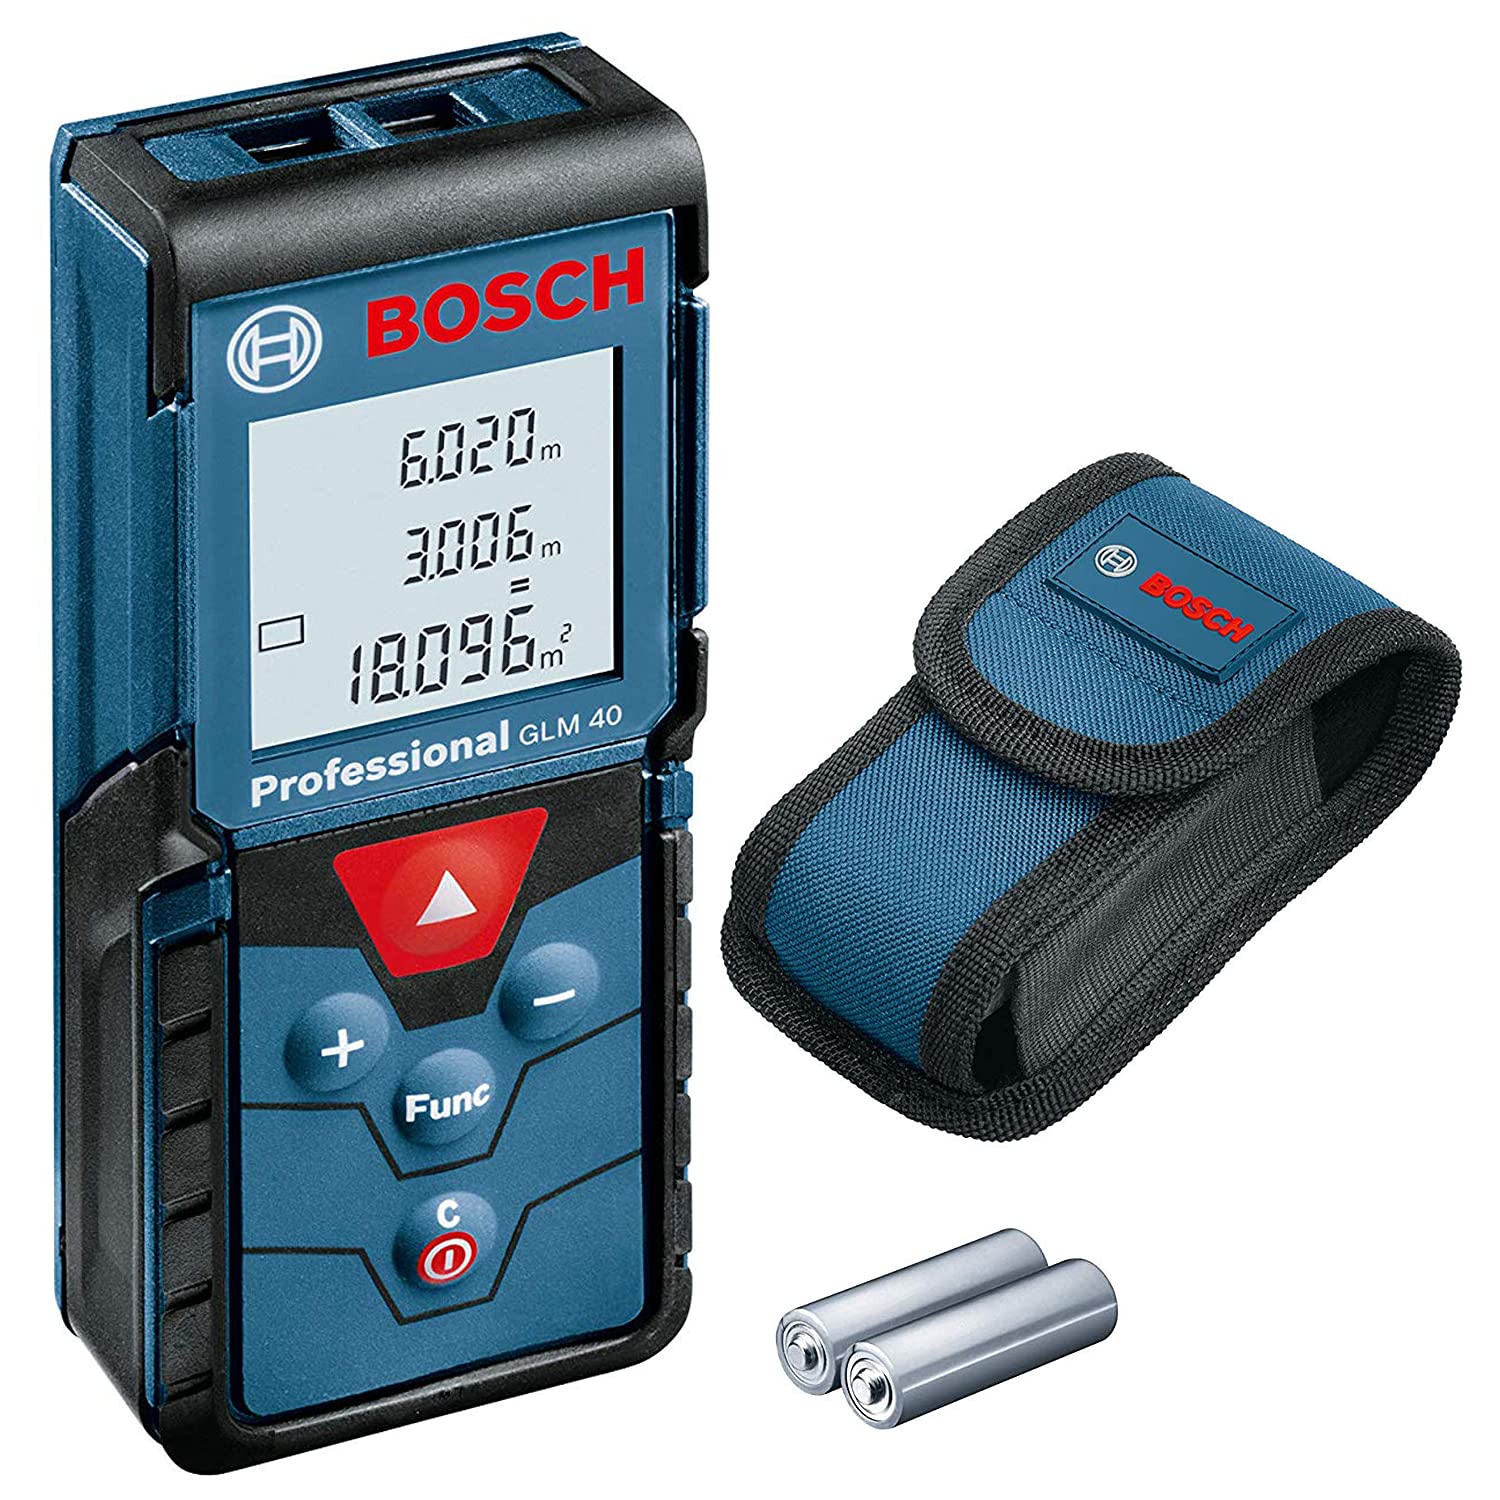 Bosch GLM 40 Plastic Professional Digital Laser Measure (Blue), 1 Piece